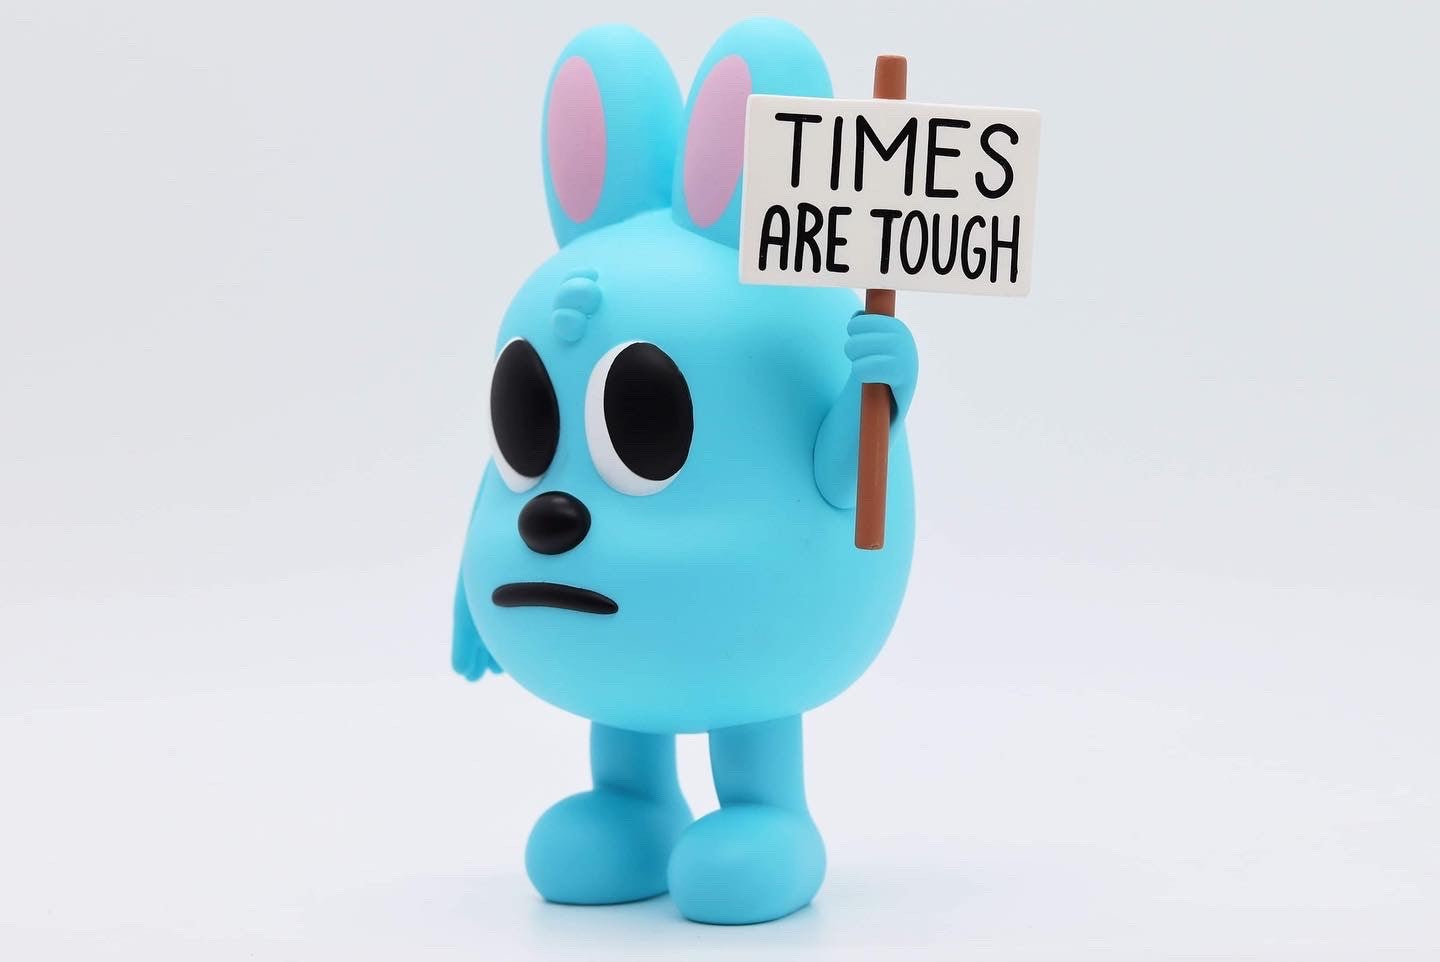 Blake Jones Buny “Times Are Tough” edition